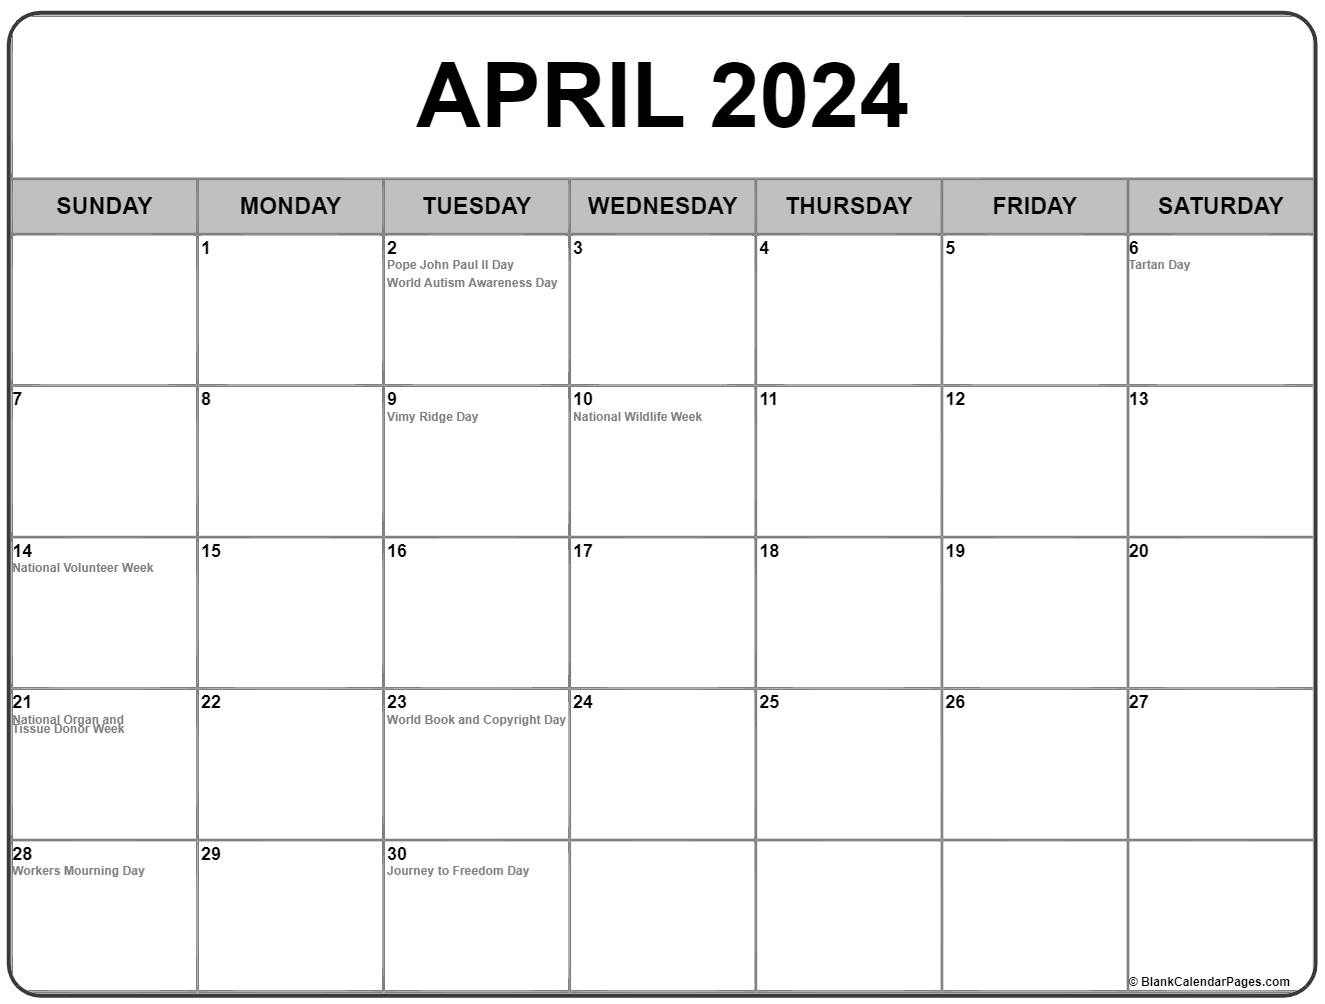 easter 2021 calendar April 2021 Calendar With Holidays easter 2021 calendar